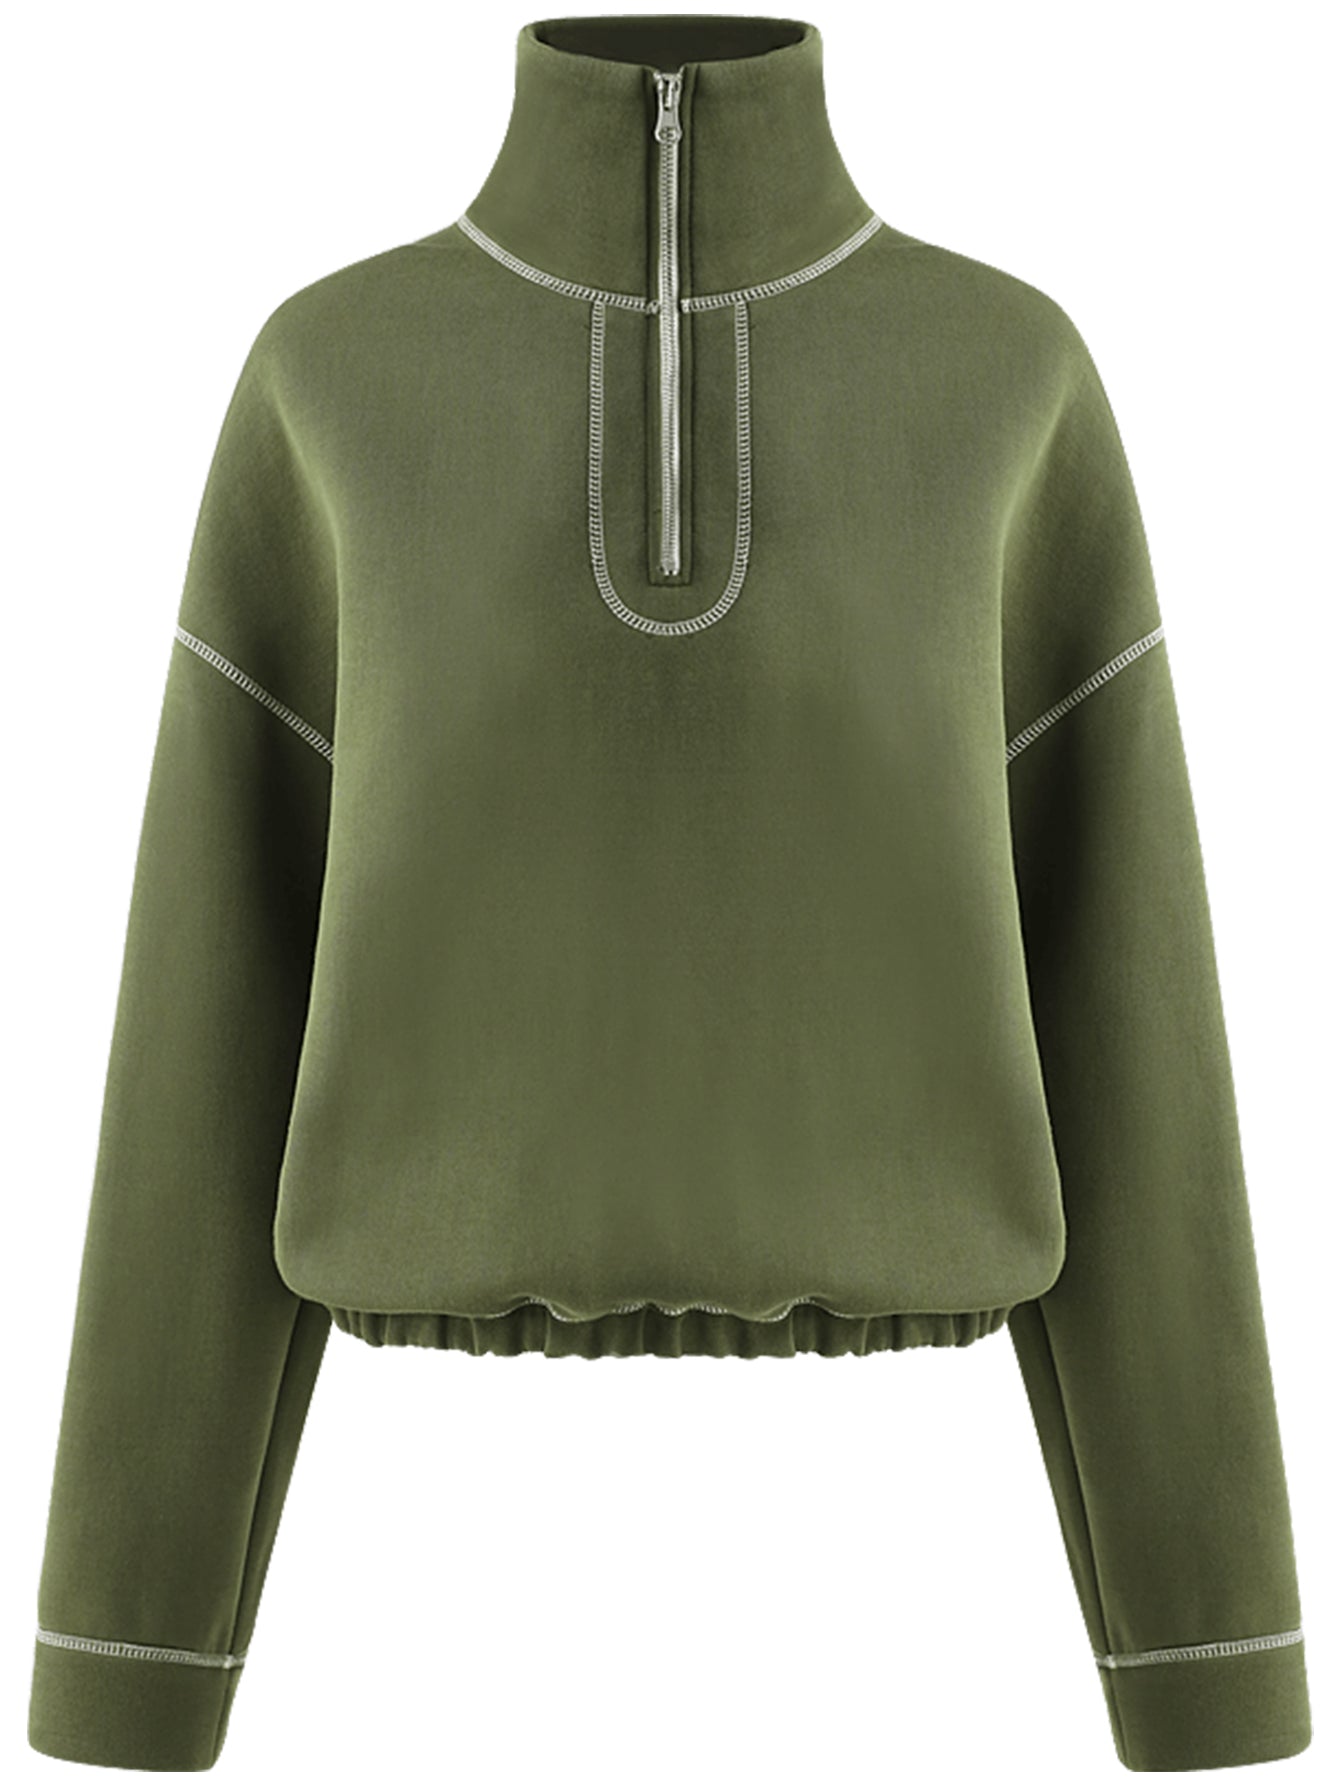 graphic-trim-zip-up-green-sweater_all_green_5.jpg